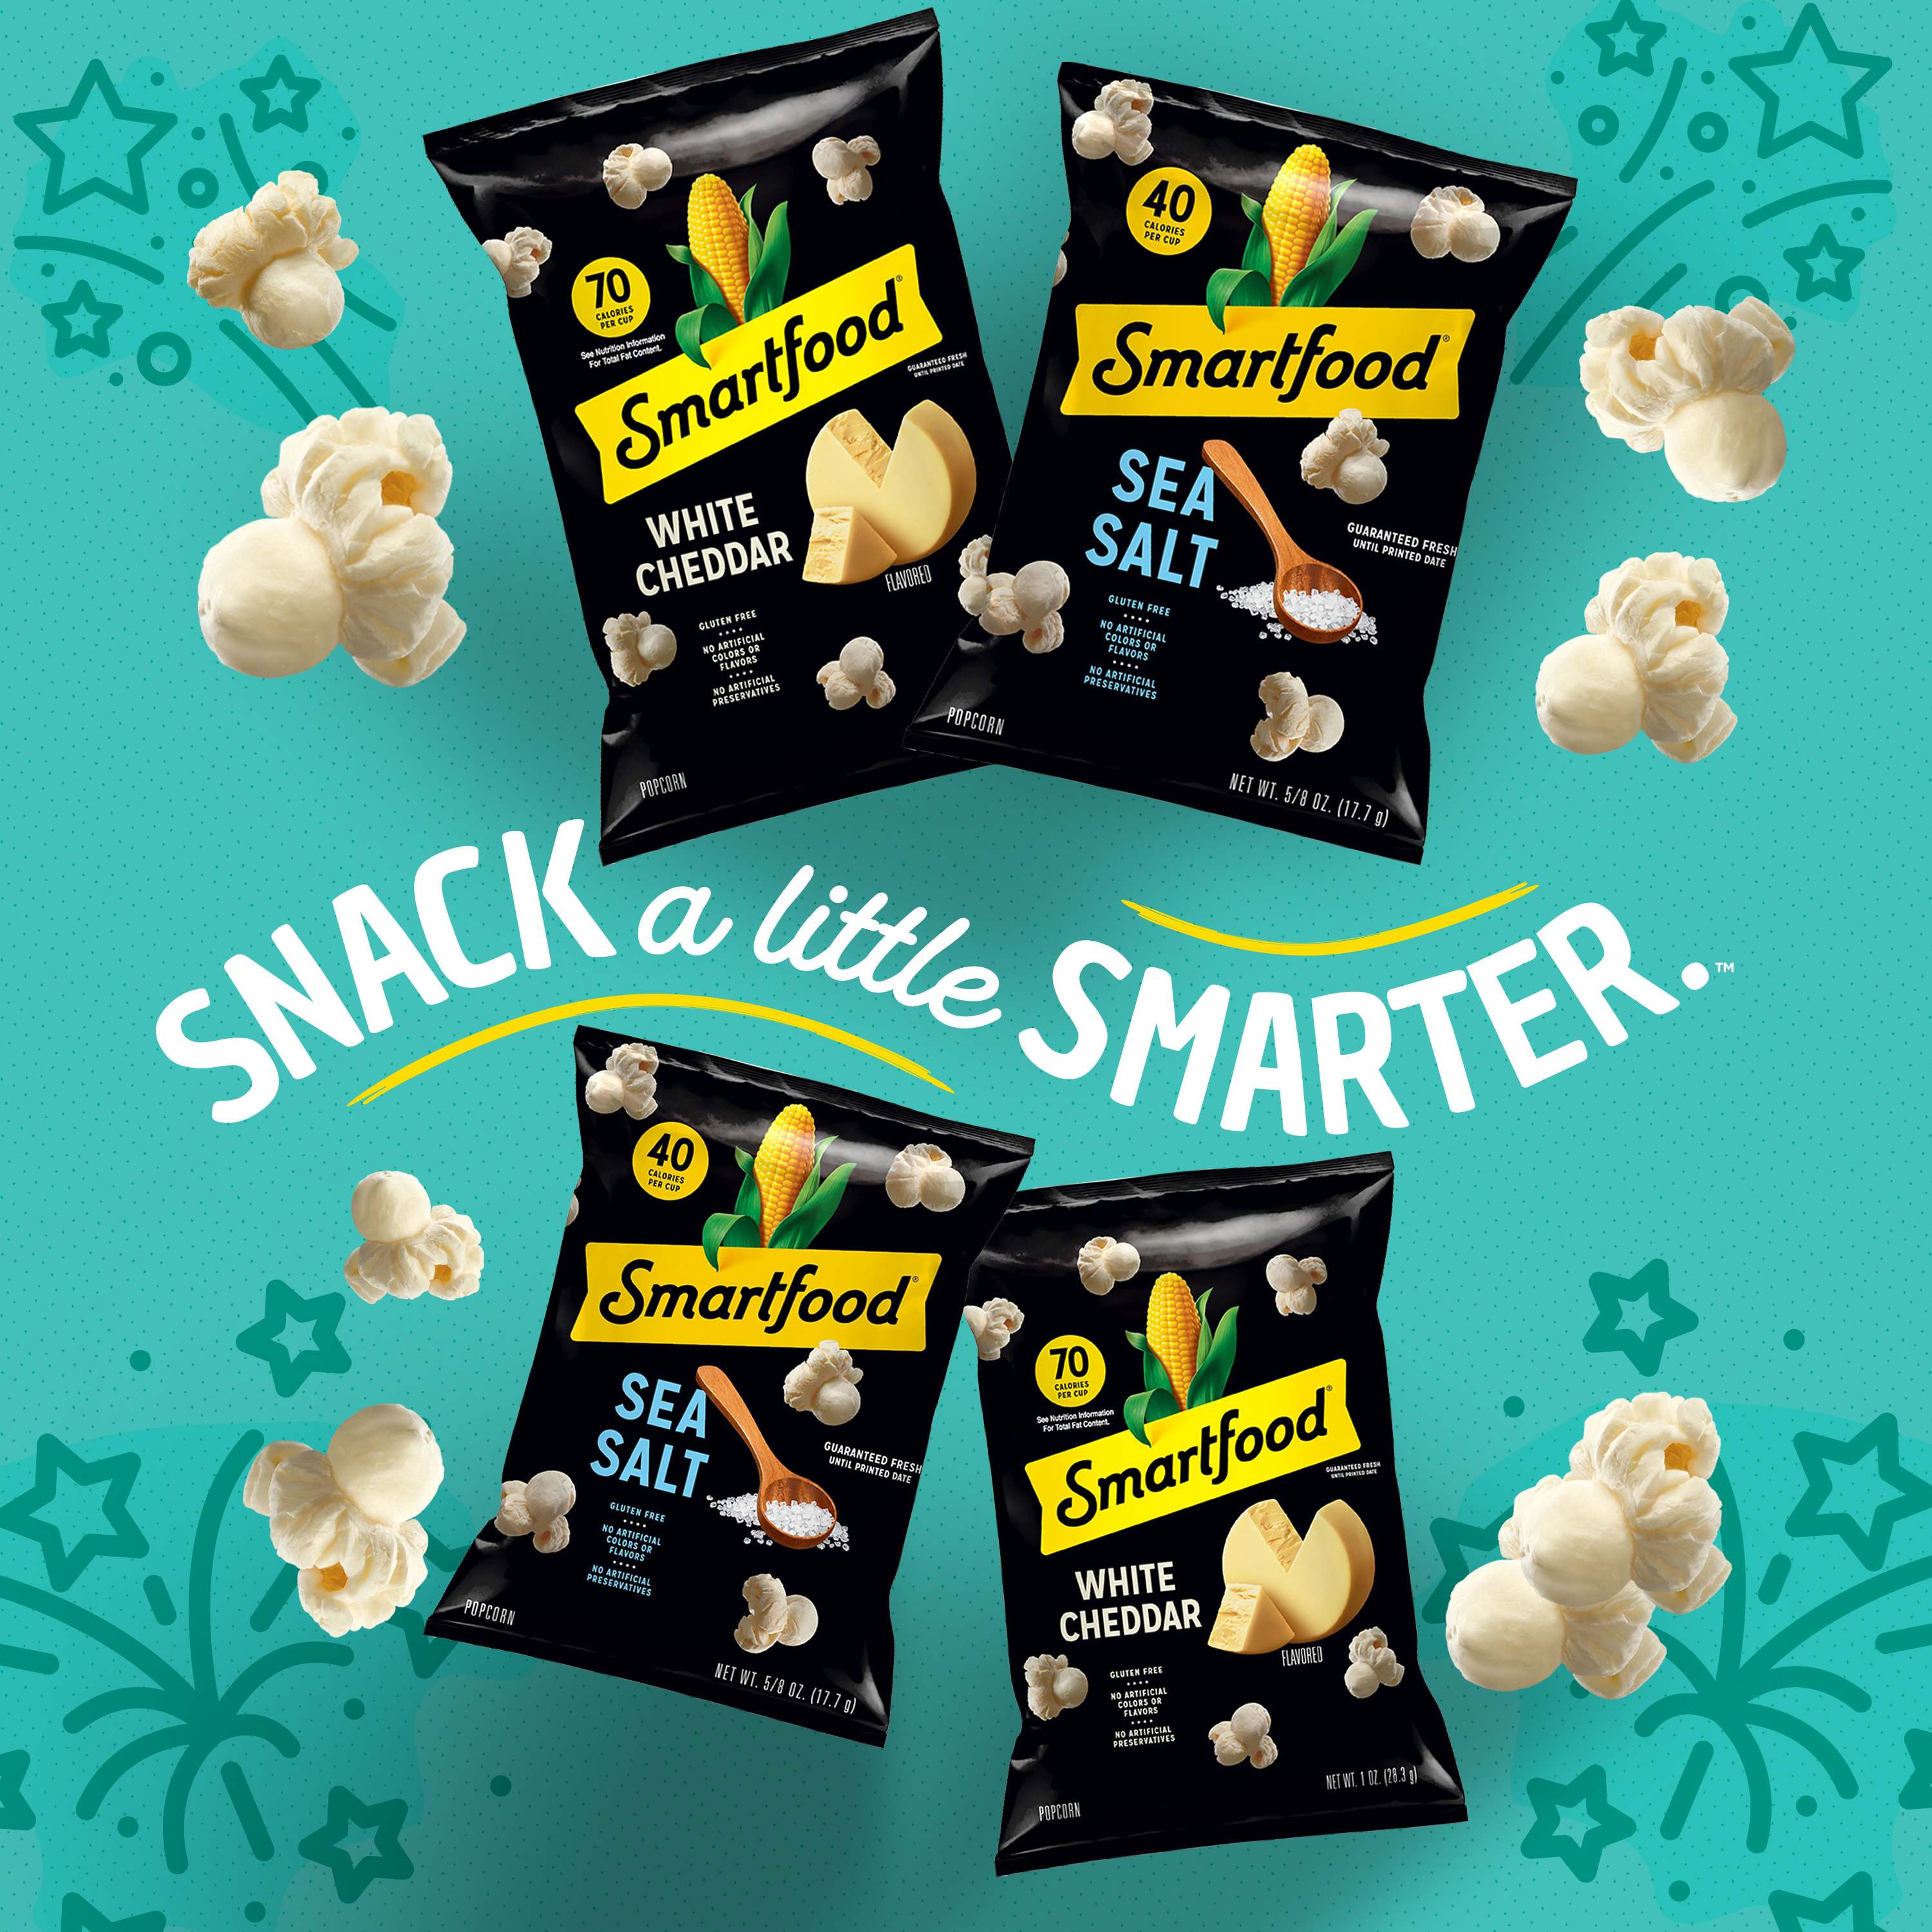 Smartfood Popcorn White Cheddar Flavored Popcorn Snacks, 0.625 Oz Bags, 40 Count Multipack - image 4 of 7